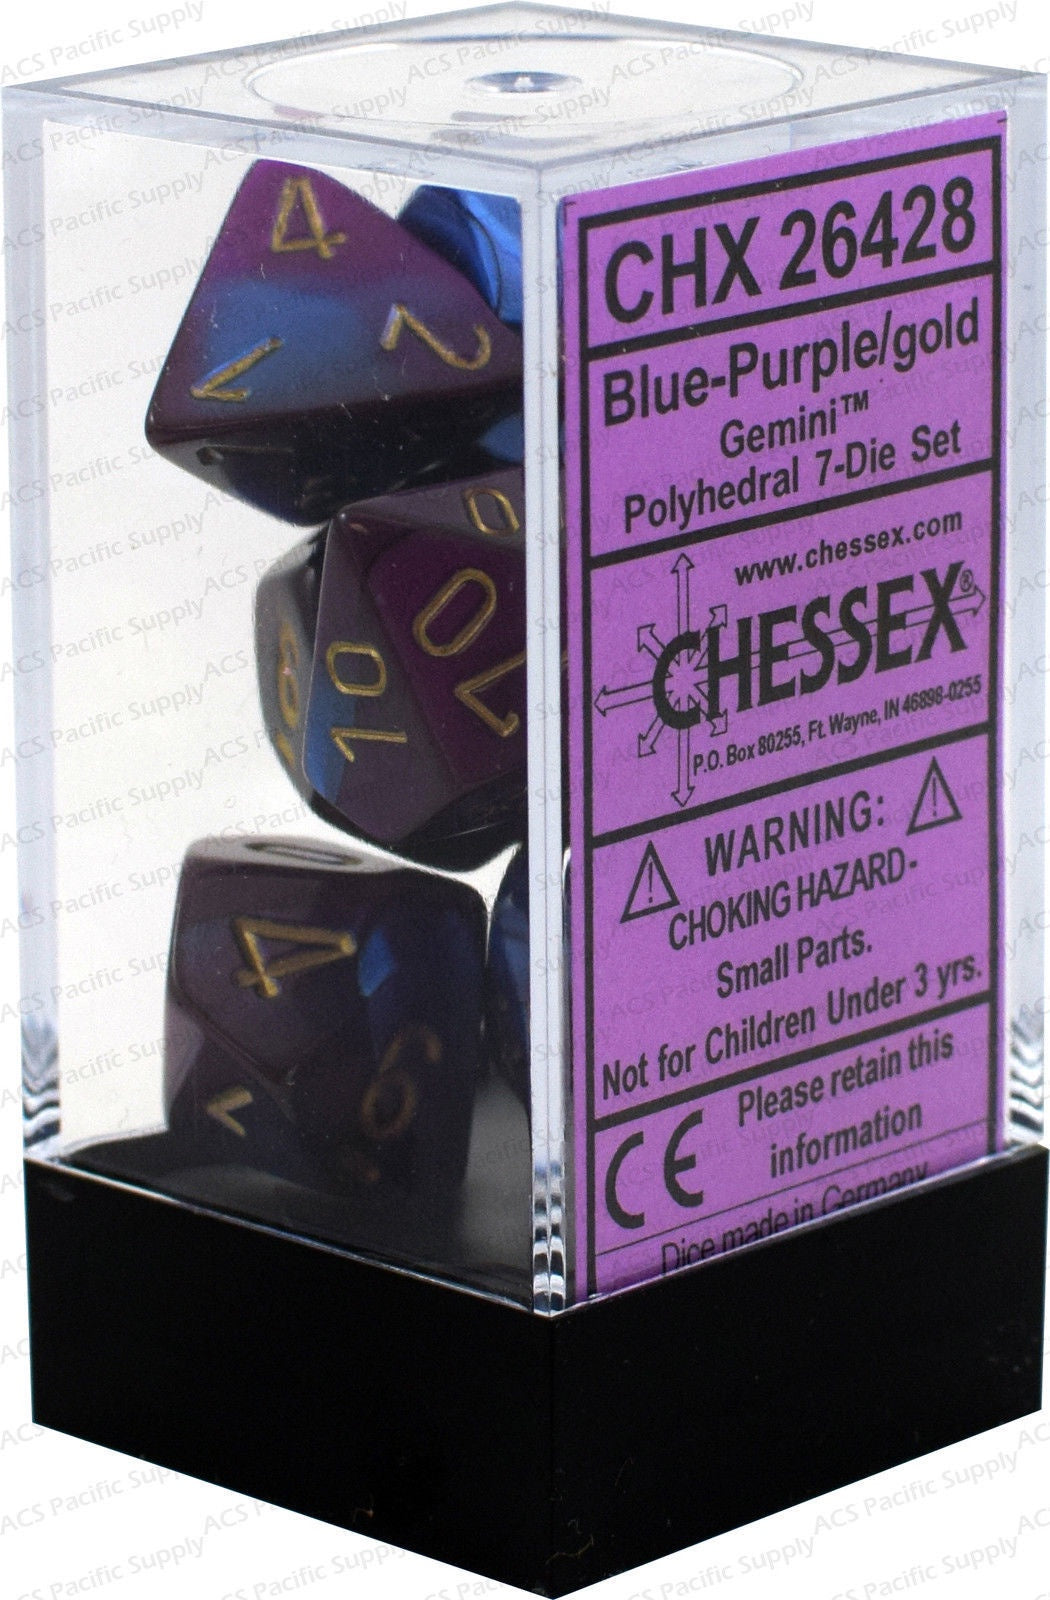 Chessex - Gemini Polyhedral 7-Die Set - Blue Purple/Gold (CHX26428)